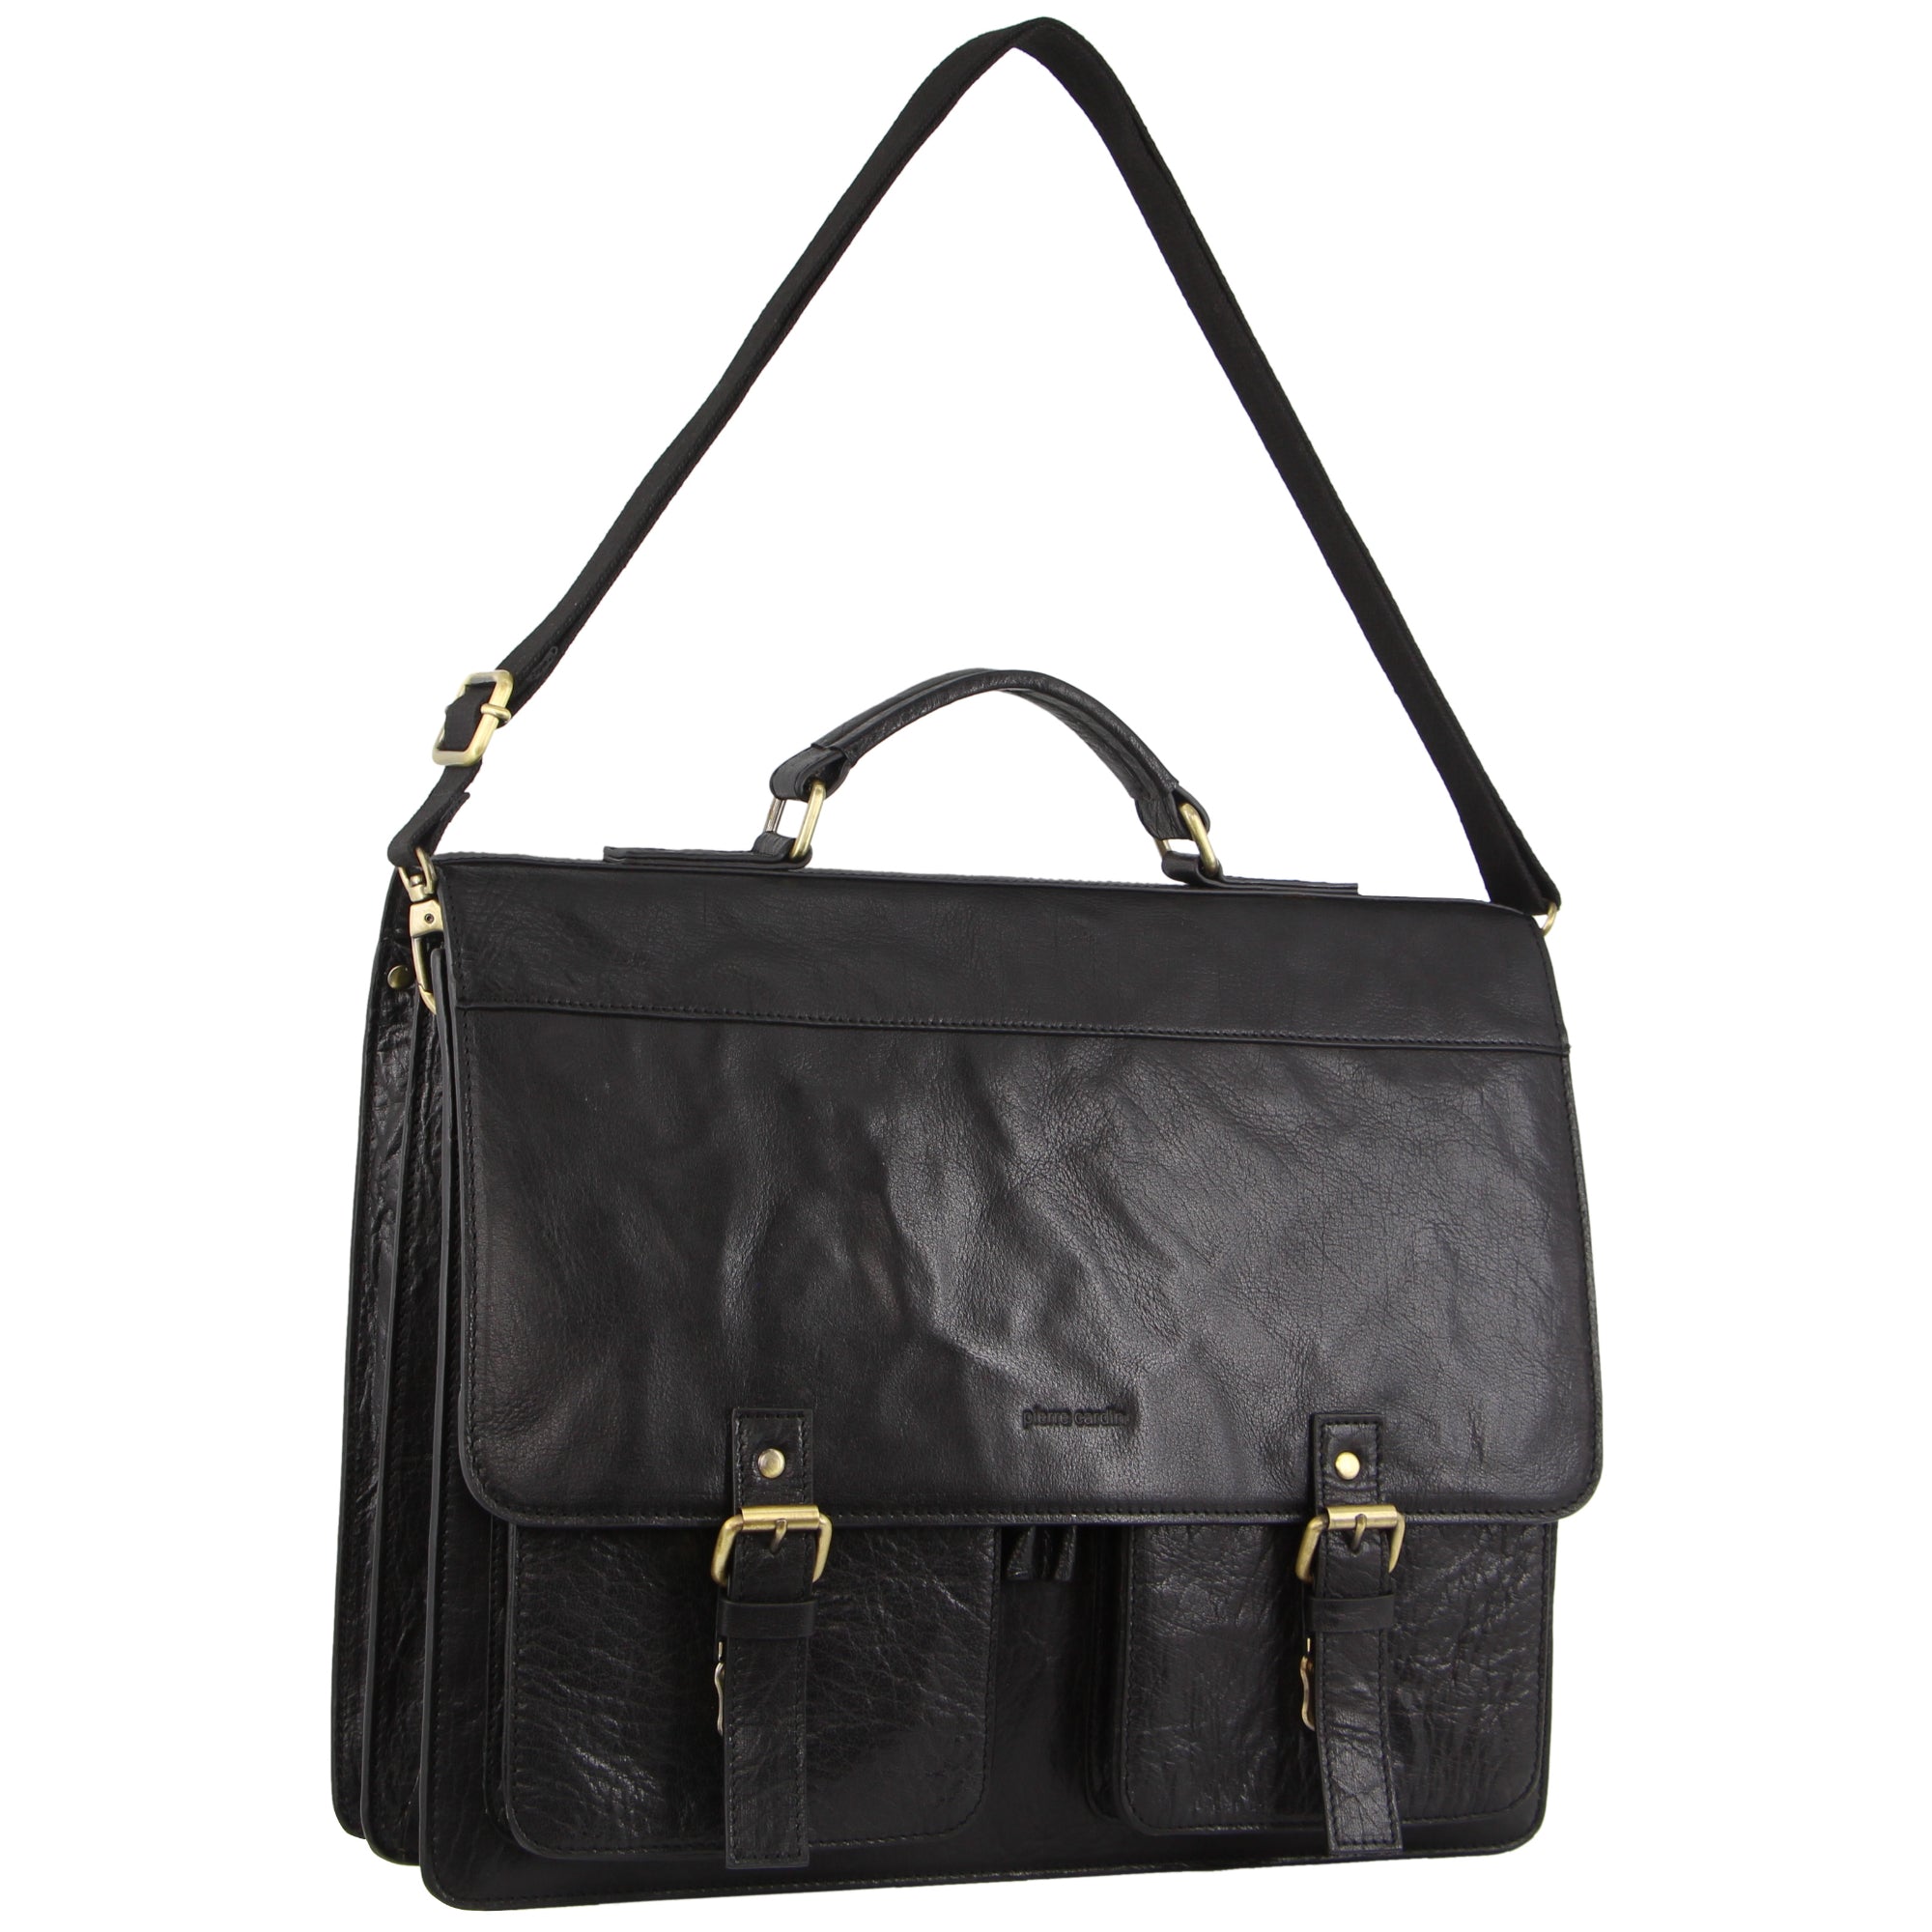 Pierre Cardin Men's Leather Business/Computer Bag in Black